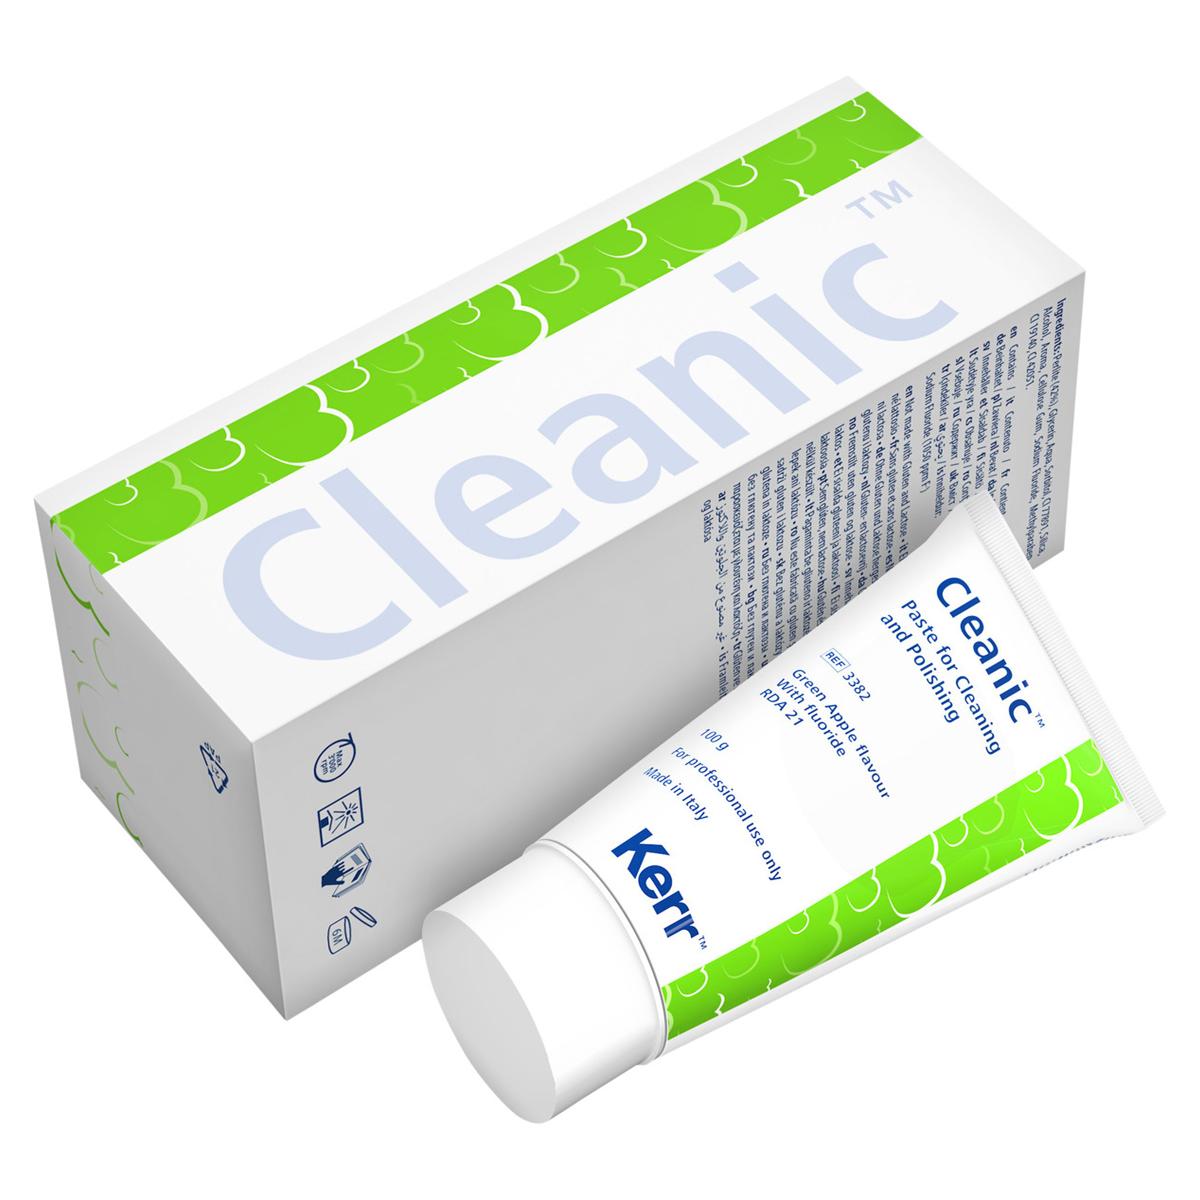 Cleanic™ - Tube - Green-Apple, mit Fluorid, ohne Menthol, Tube 100 g